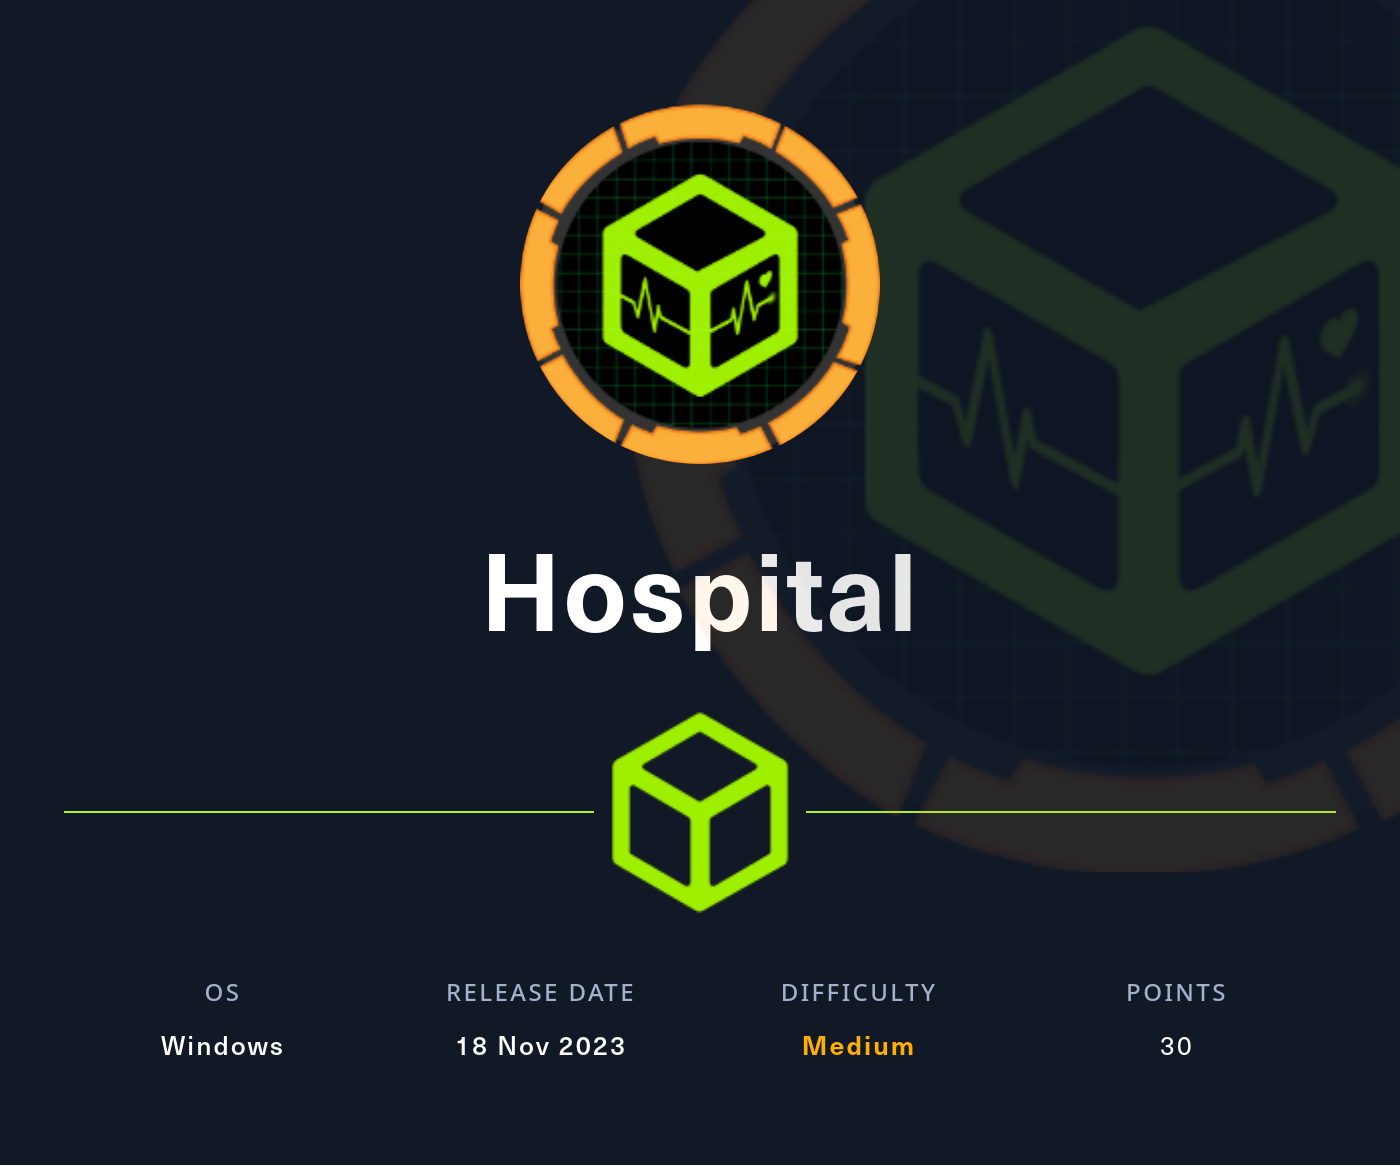 HackTheBox | Hospital